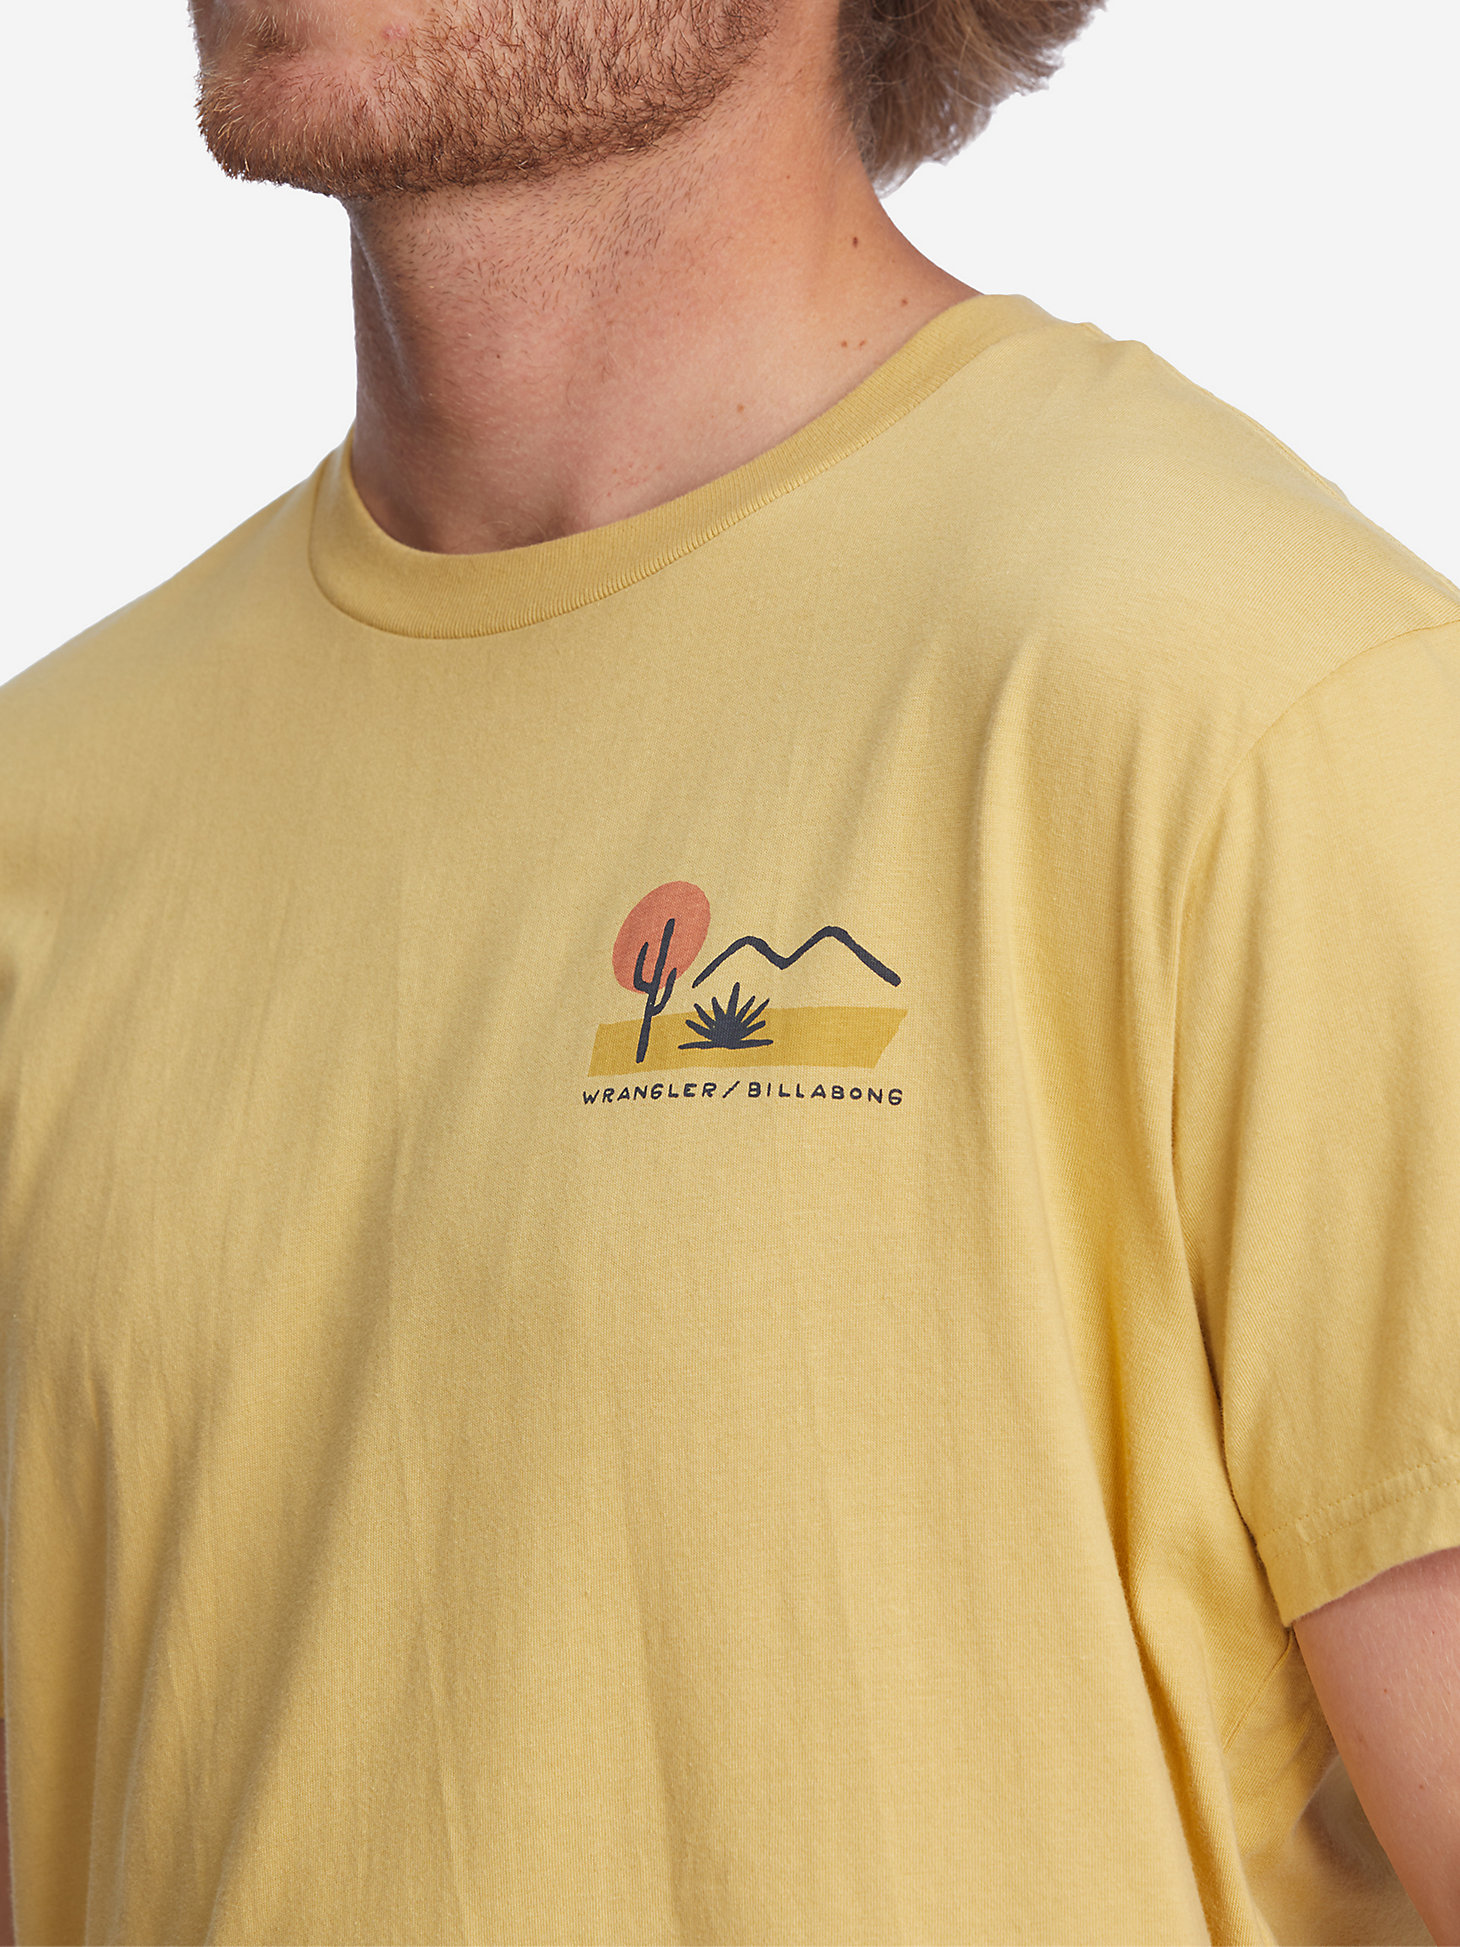 Billabong x Wrangler® Men's Rancher Horizon Graphic T-Shirt in Straw alternative view 2